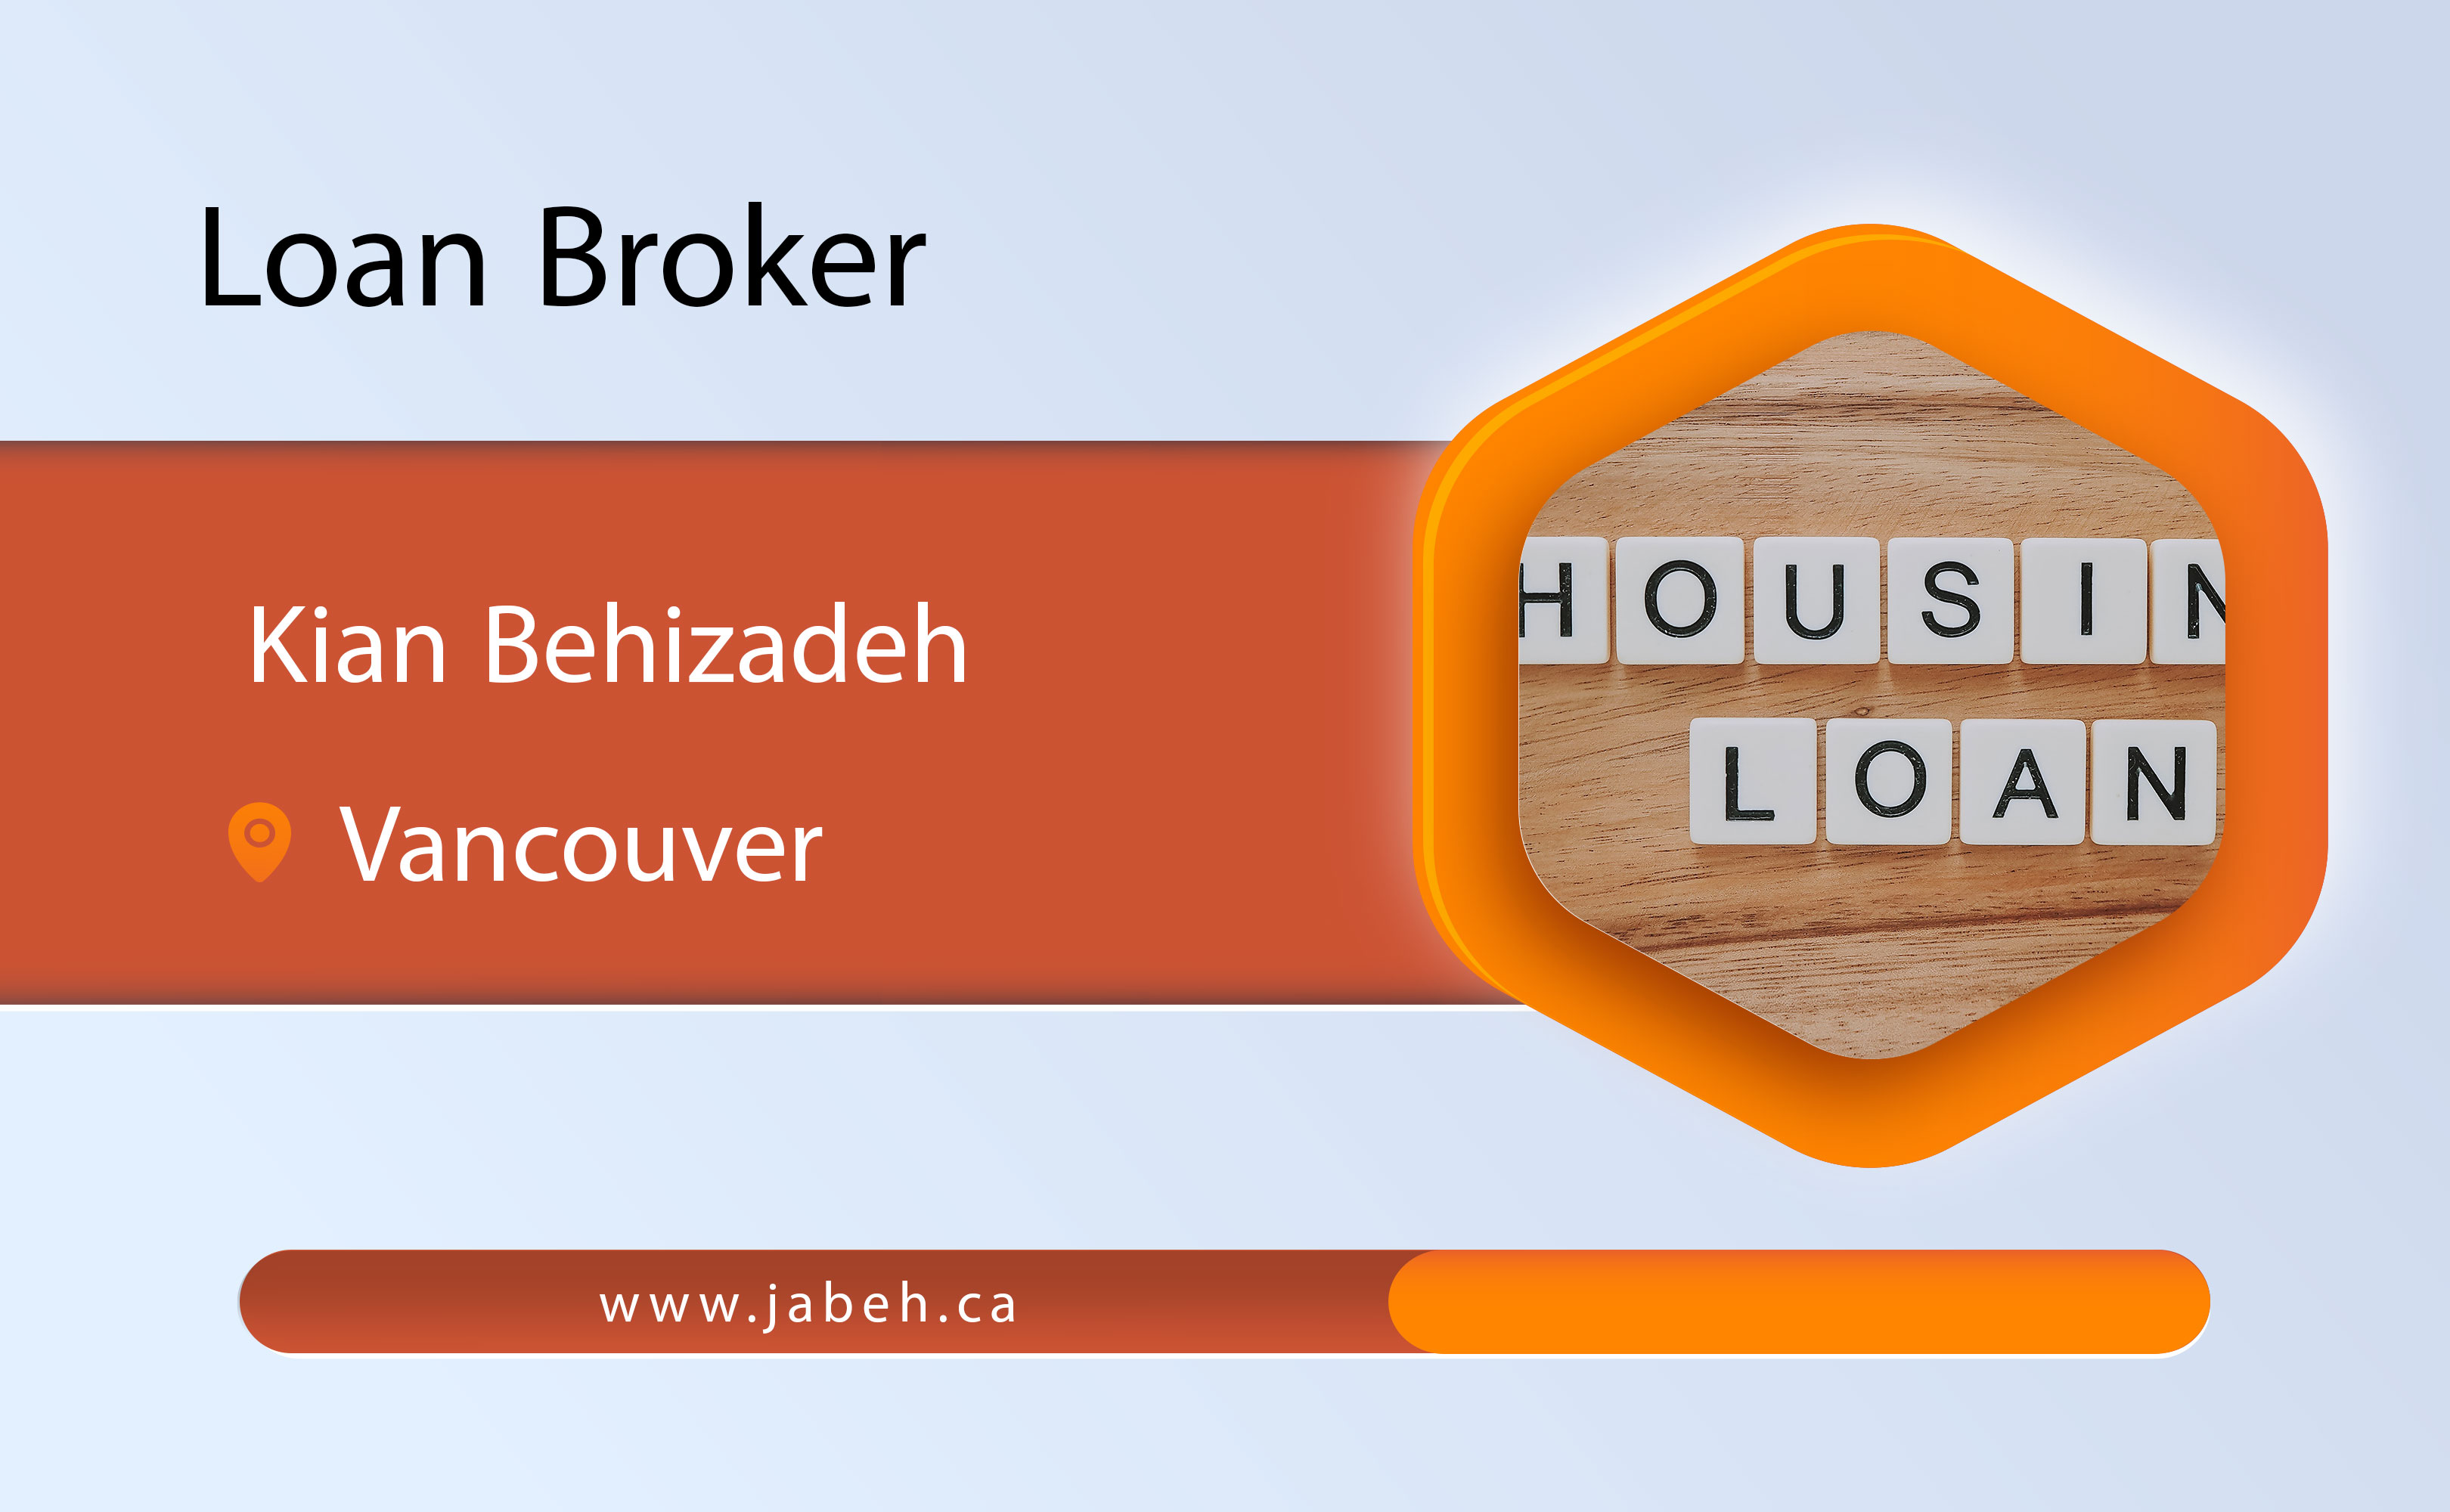 Iranian loan broker Kian Behizadeh in Vancouver